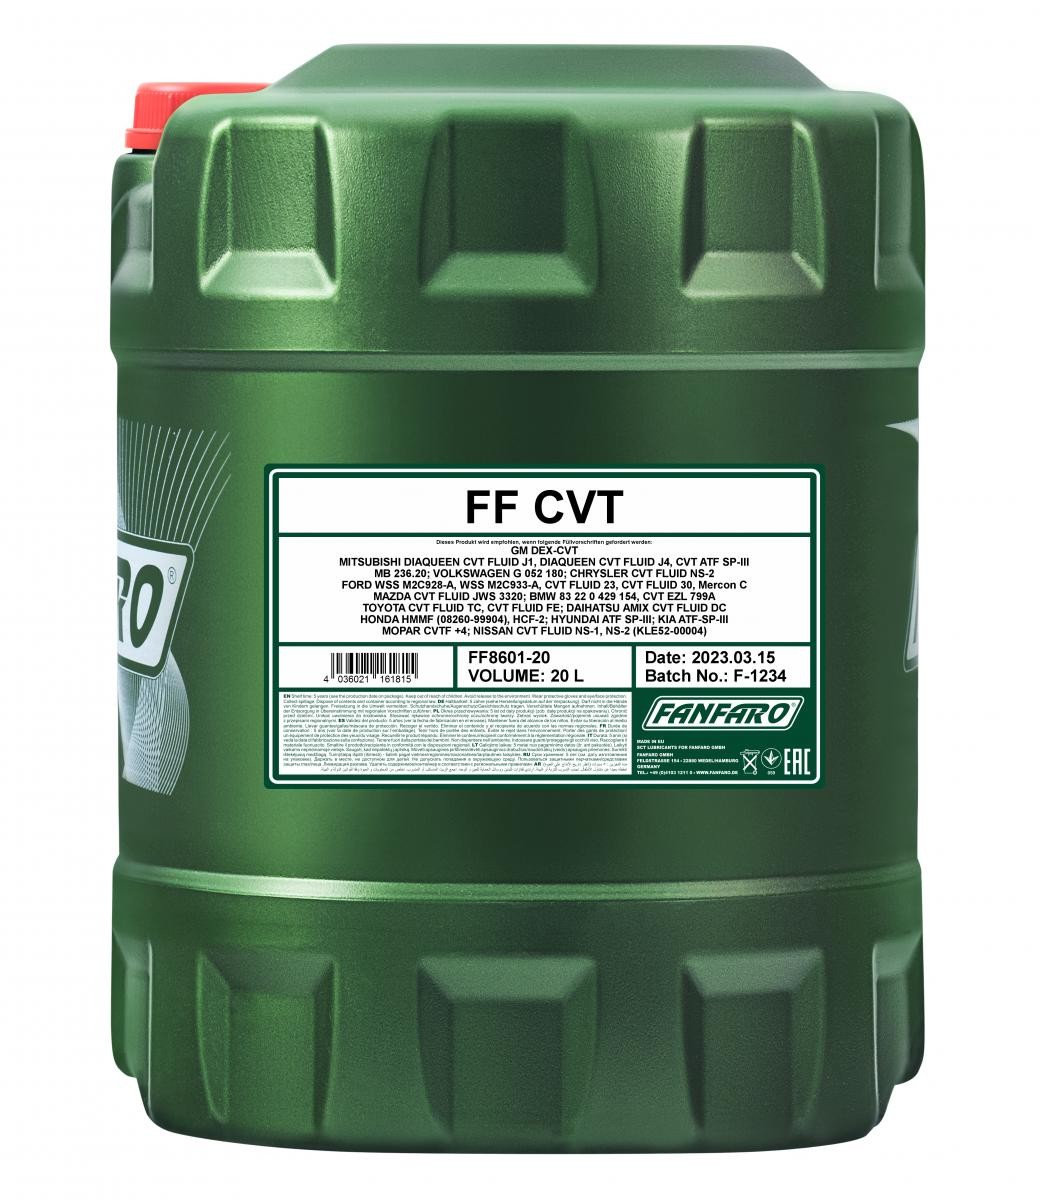 Original FF8601-20 FANFARO CVT oil SEAT